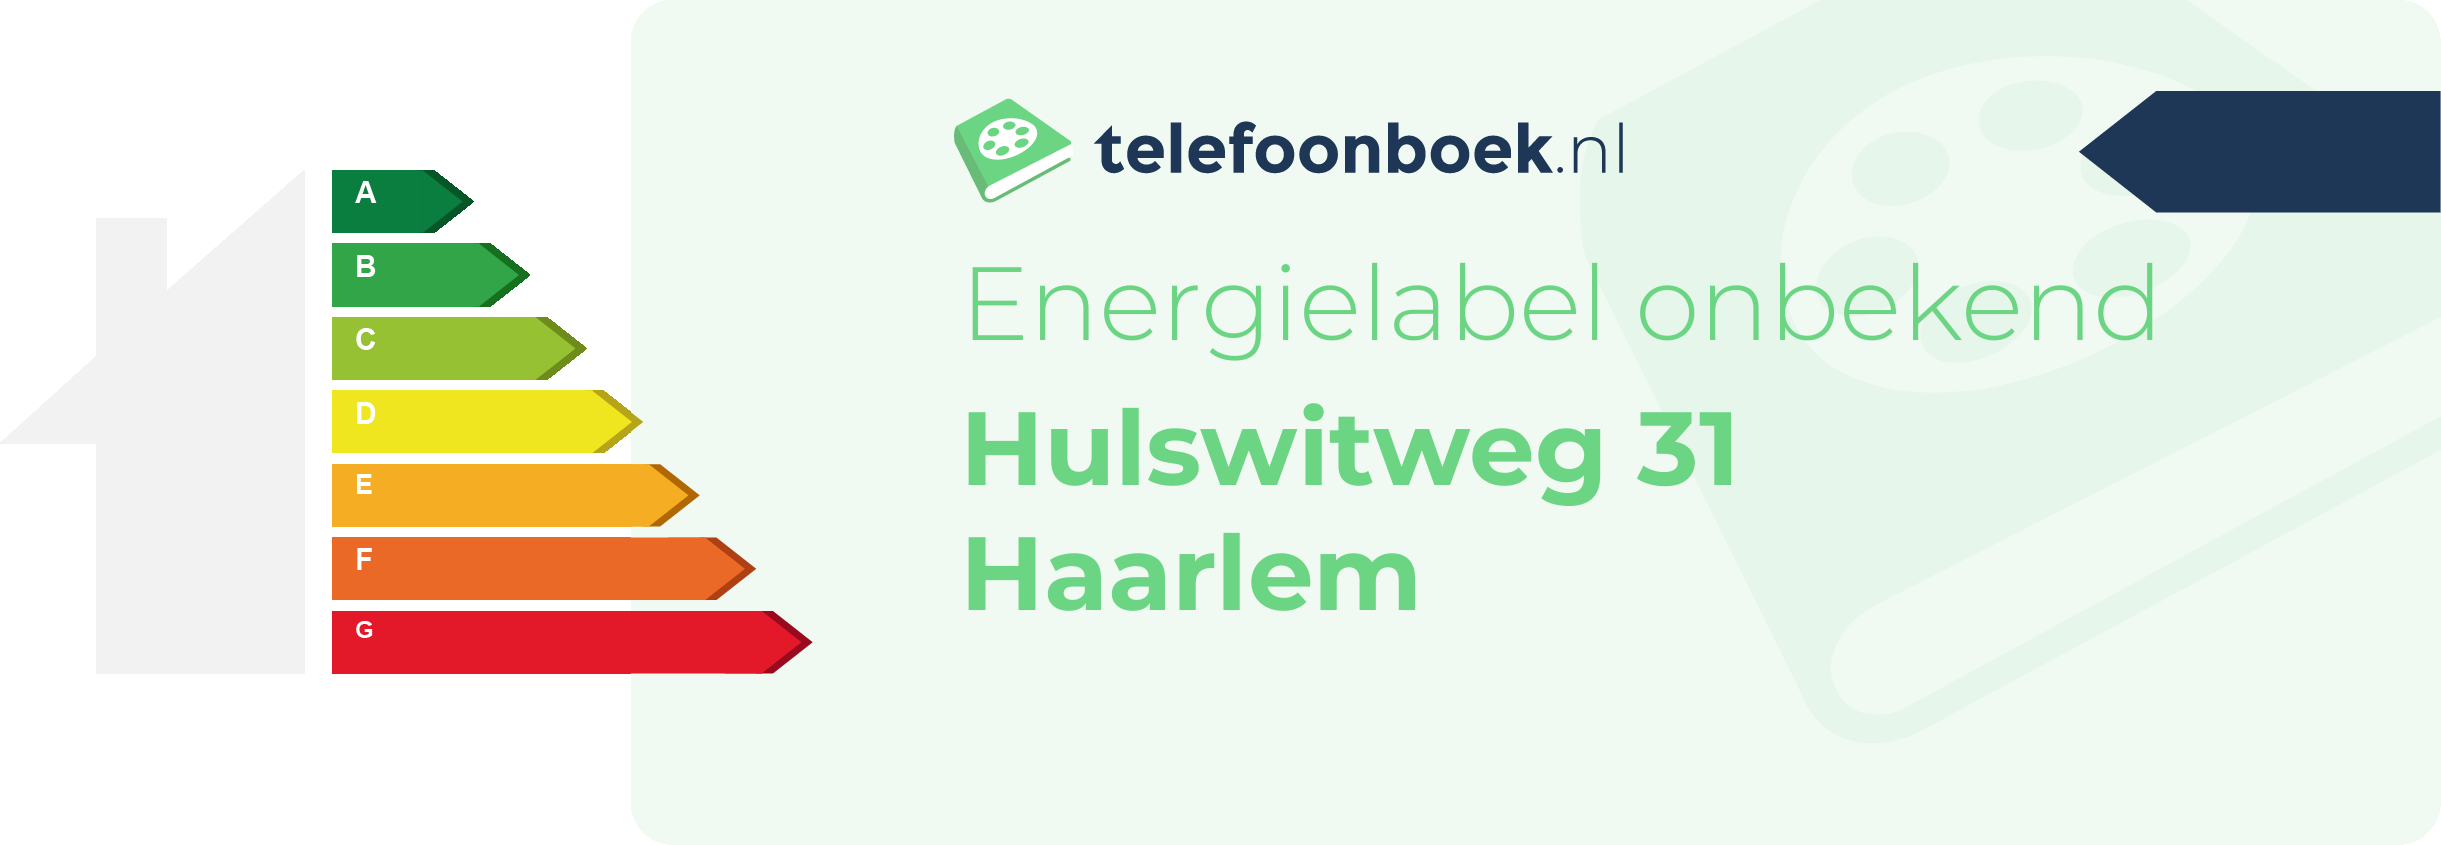 Energielabel Hulswitweg 31 Haarlem